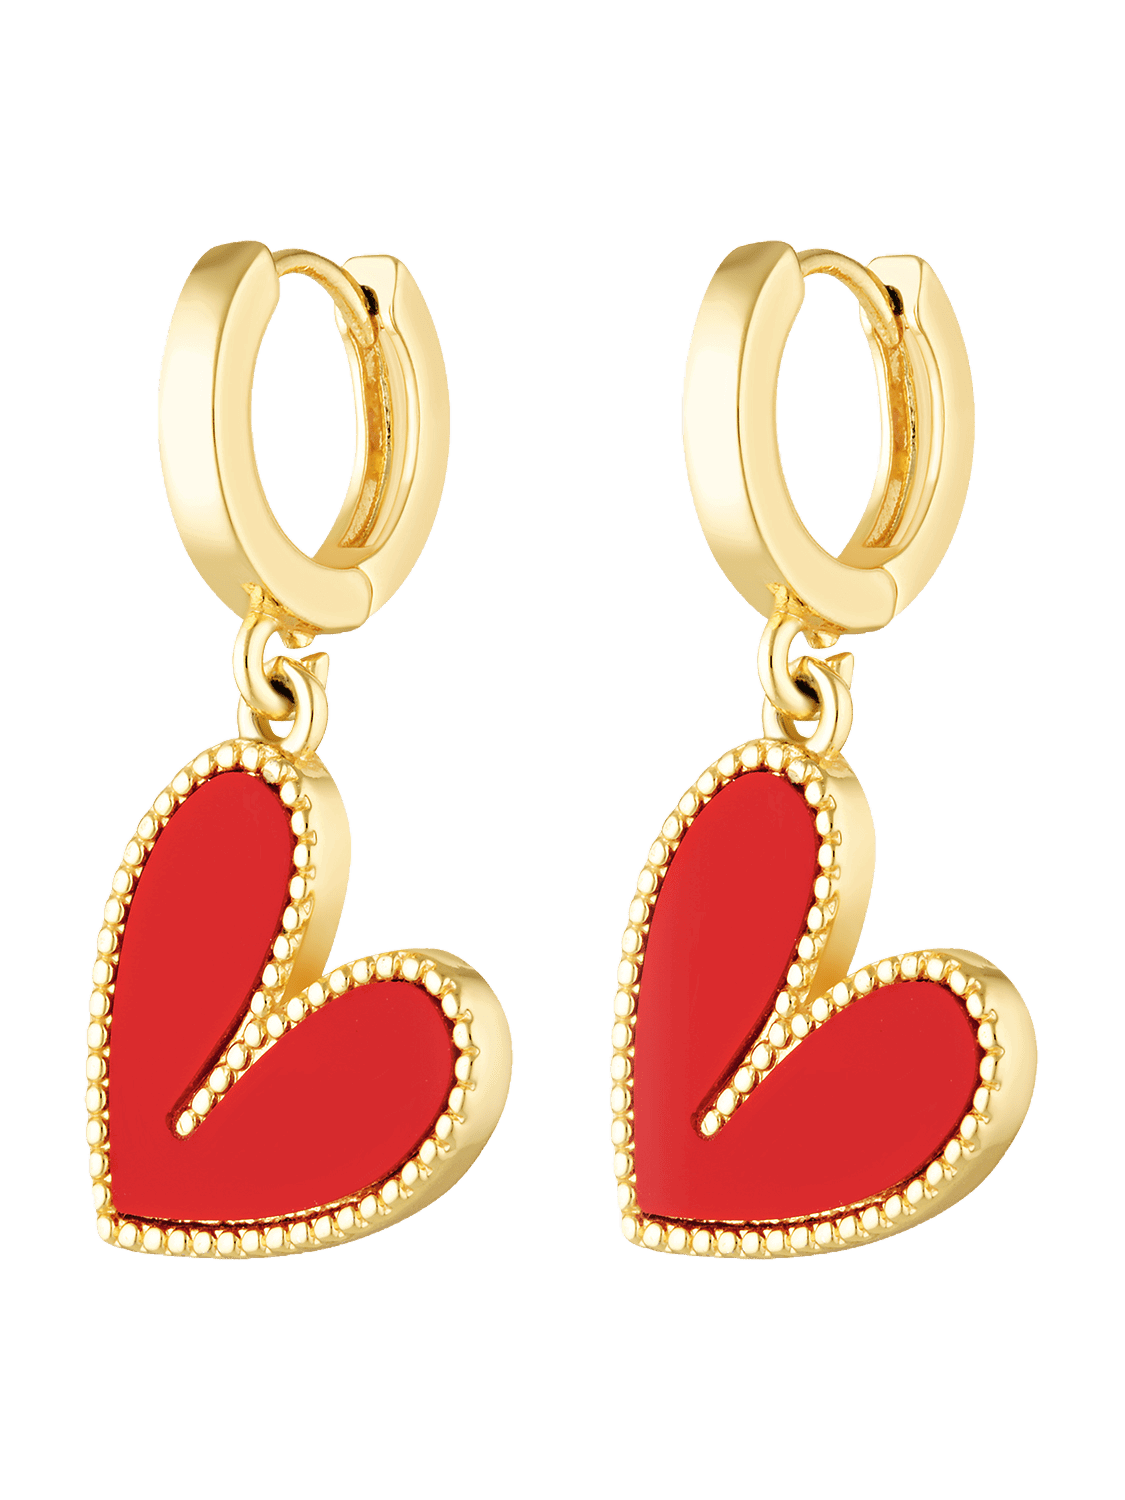 Cupid Hoops red heart shaped earrings 